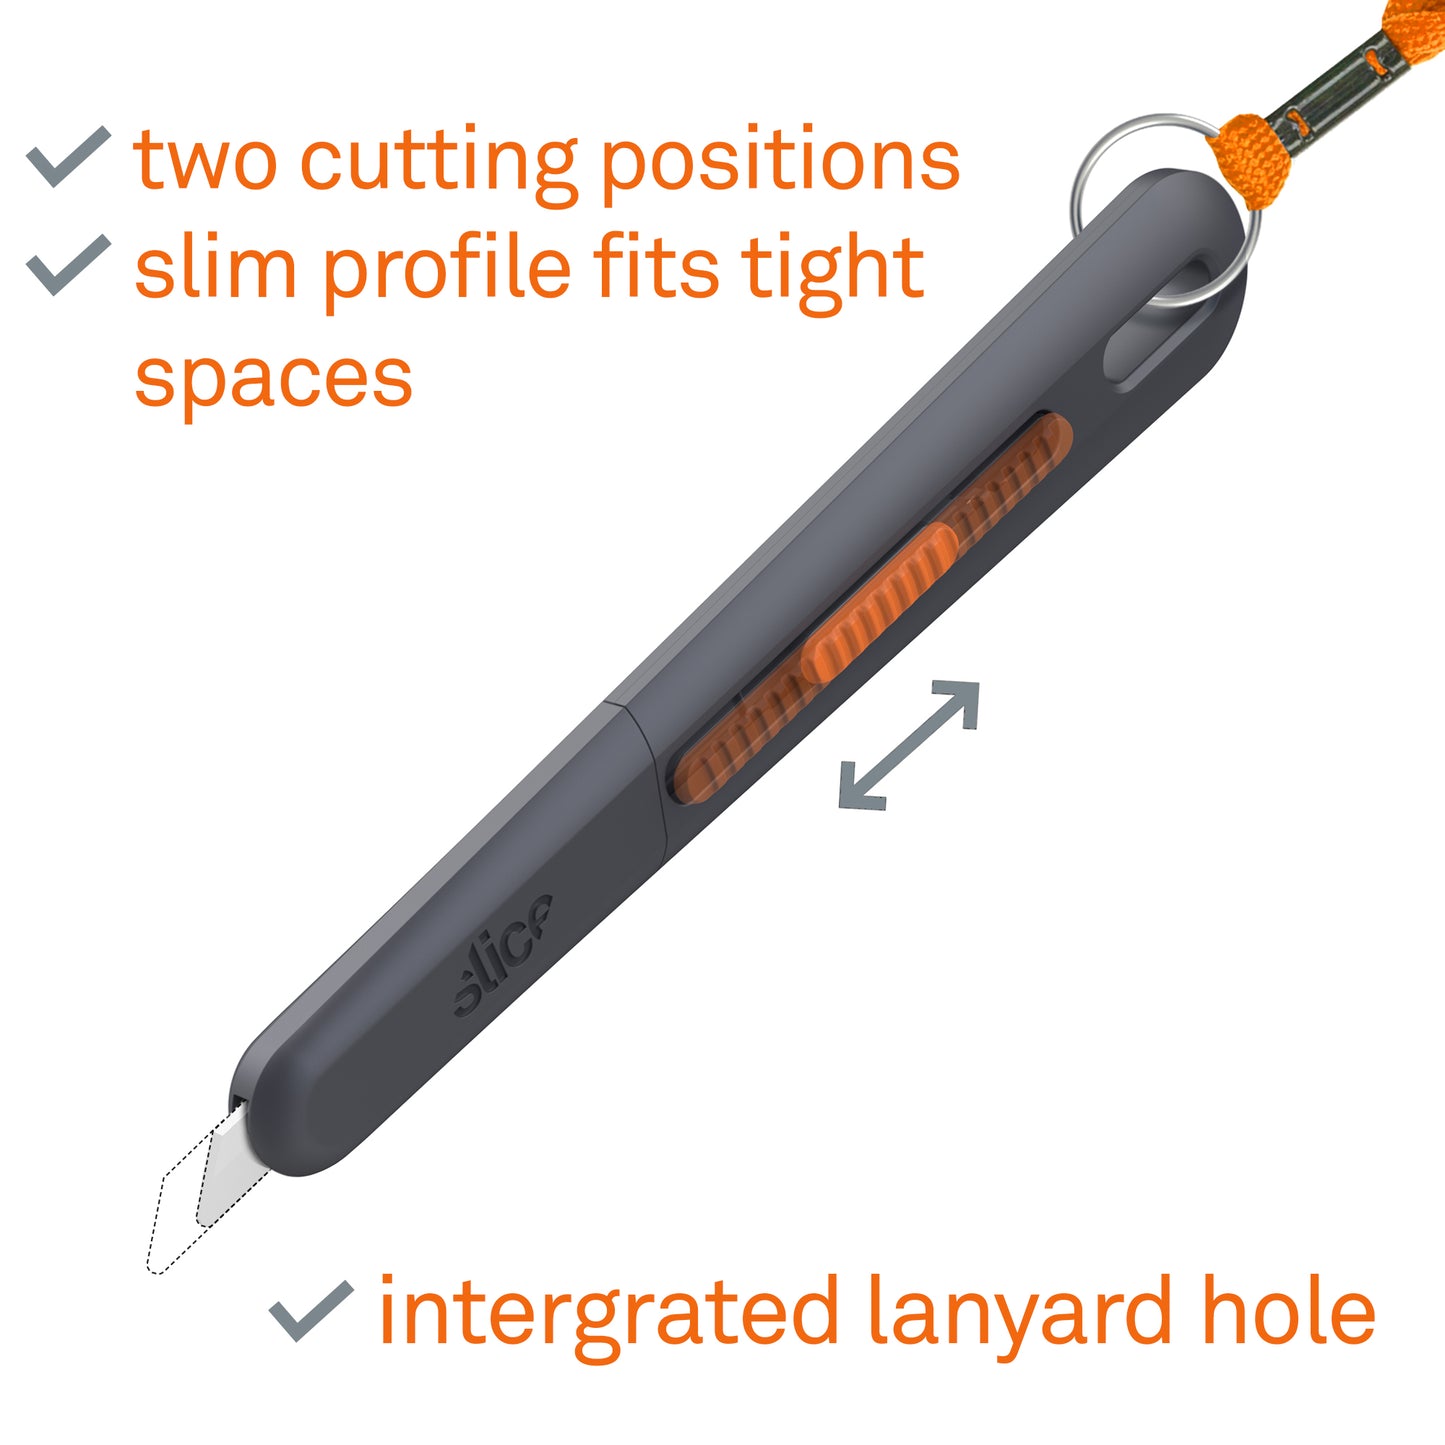 Slice Manual Slim Pen Cutter